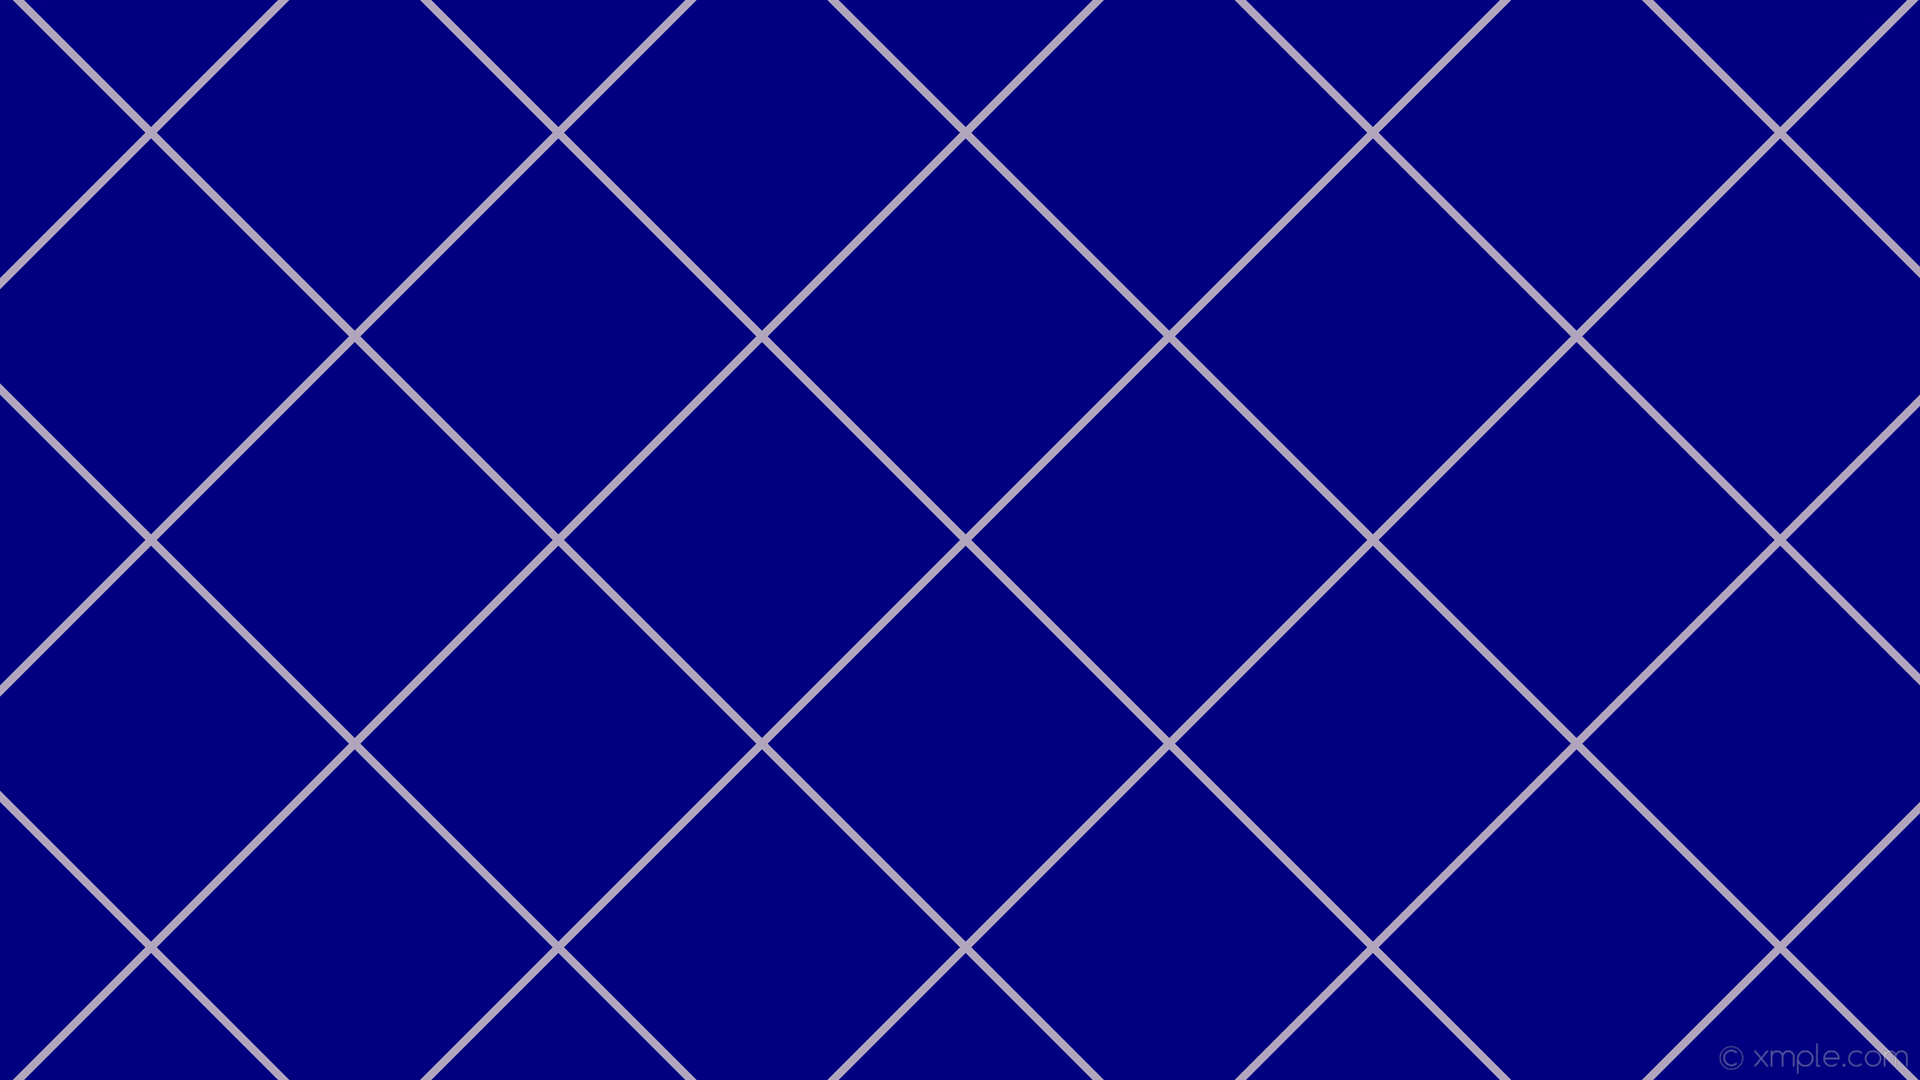 1920x1080 wallpaper graph paper white blue grid navy antique white #000080 #faebd7  45Â° 8px